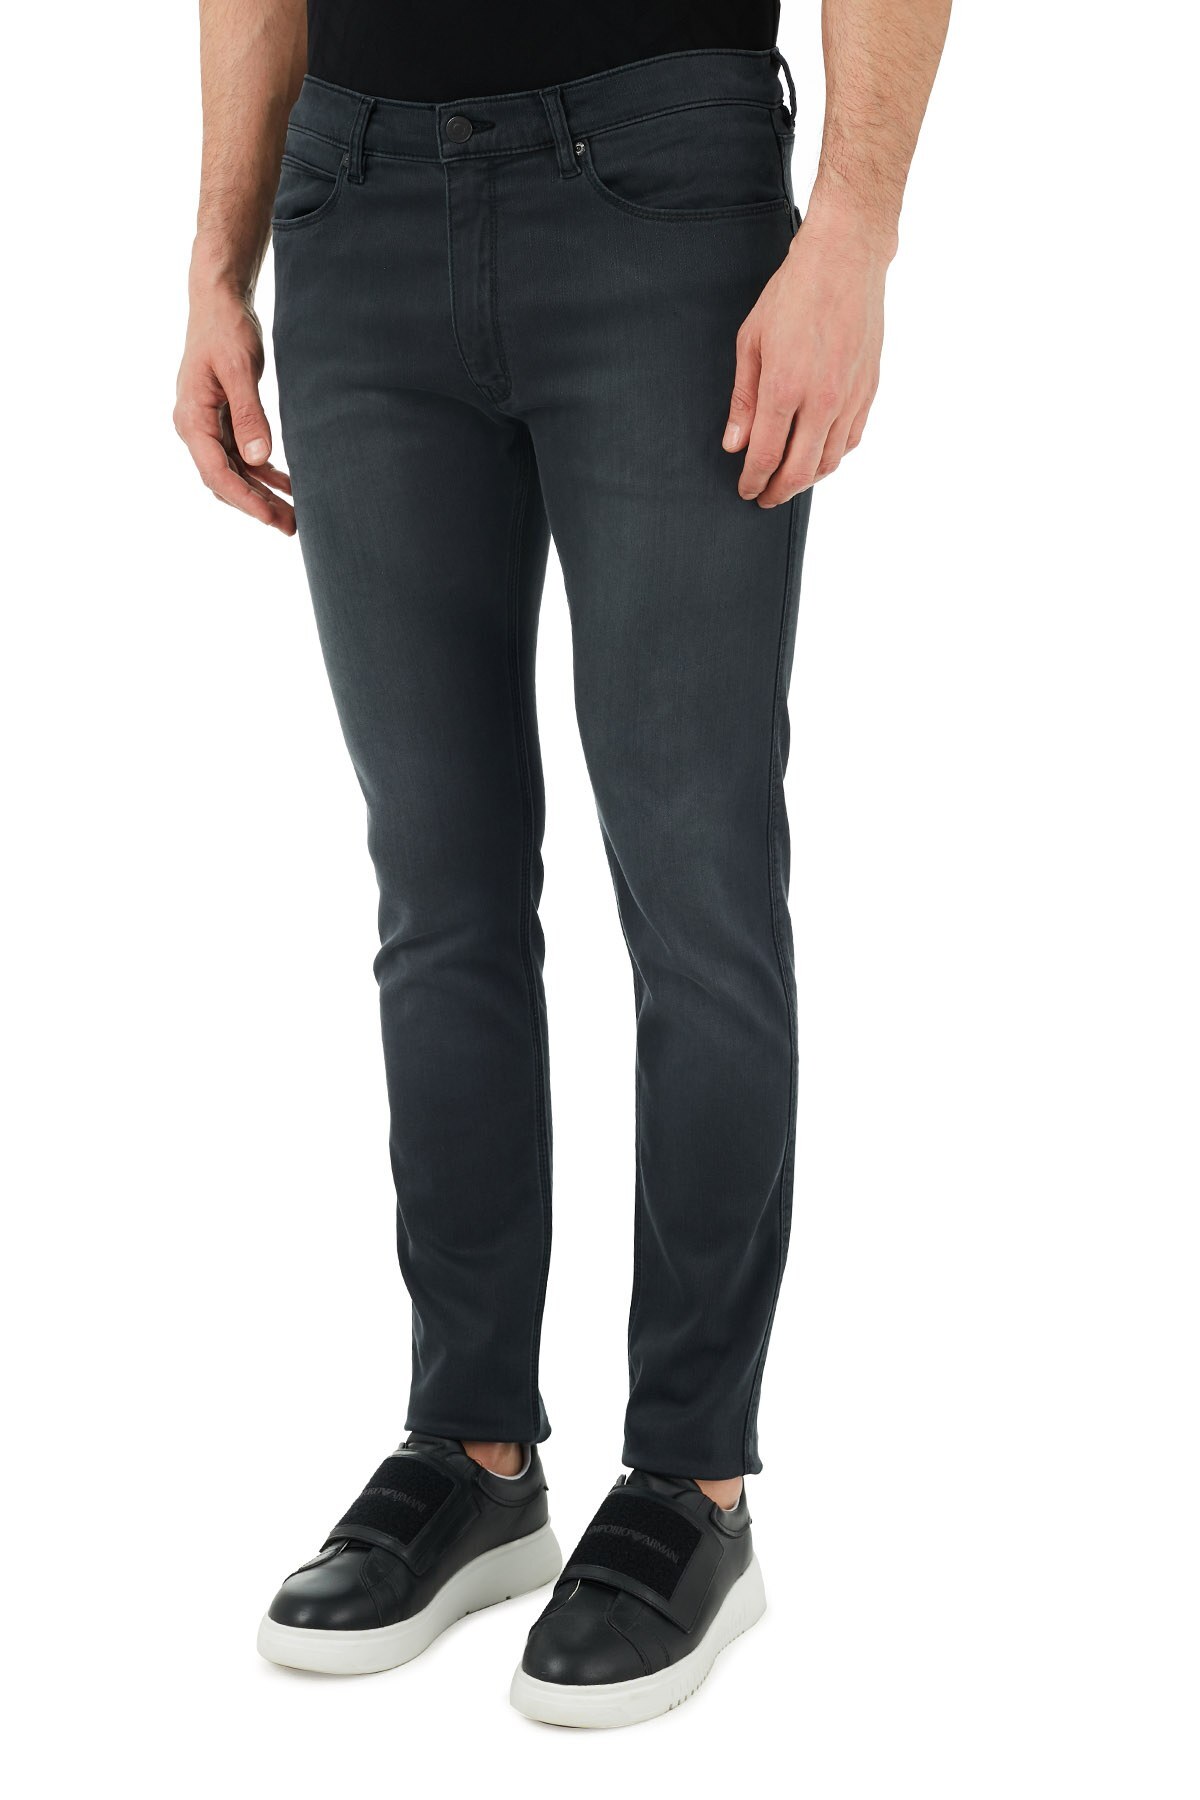 Hugo Boss Pamuklu Extra Slim Fit Jeans Erkek Kot Pantolon 50447017 010 FÜME